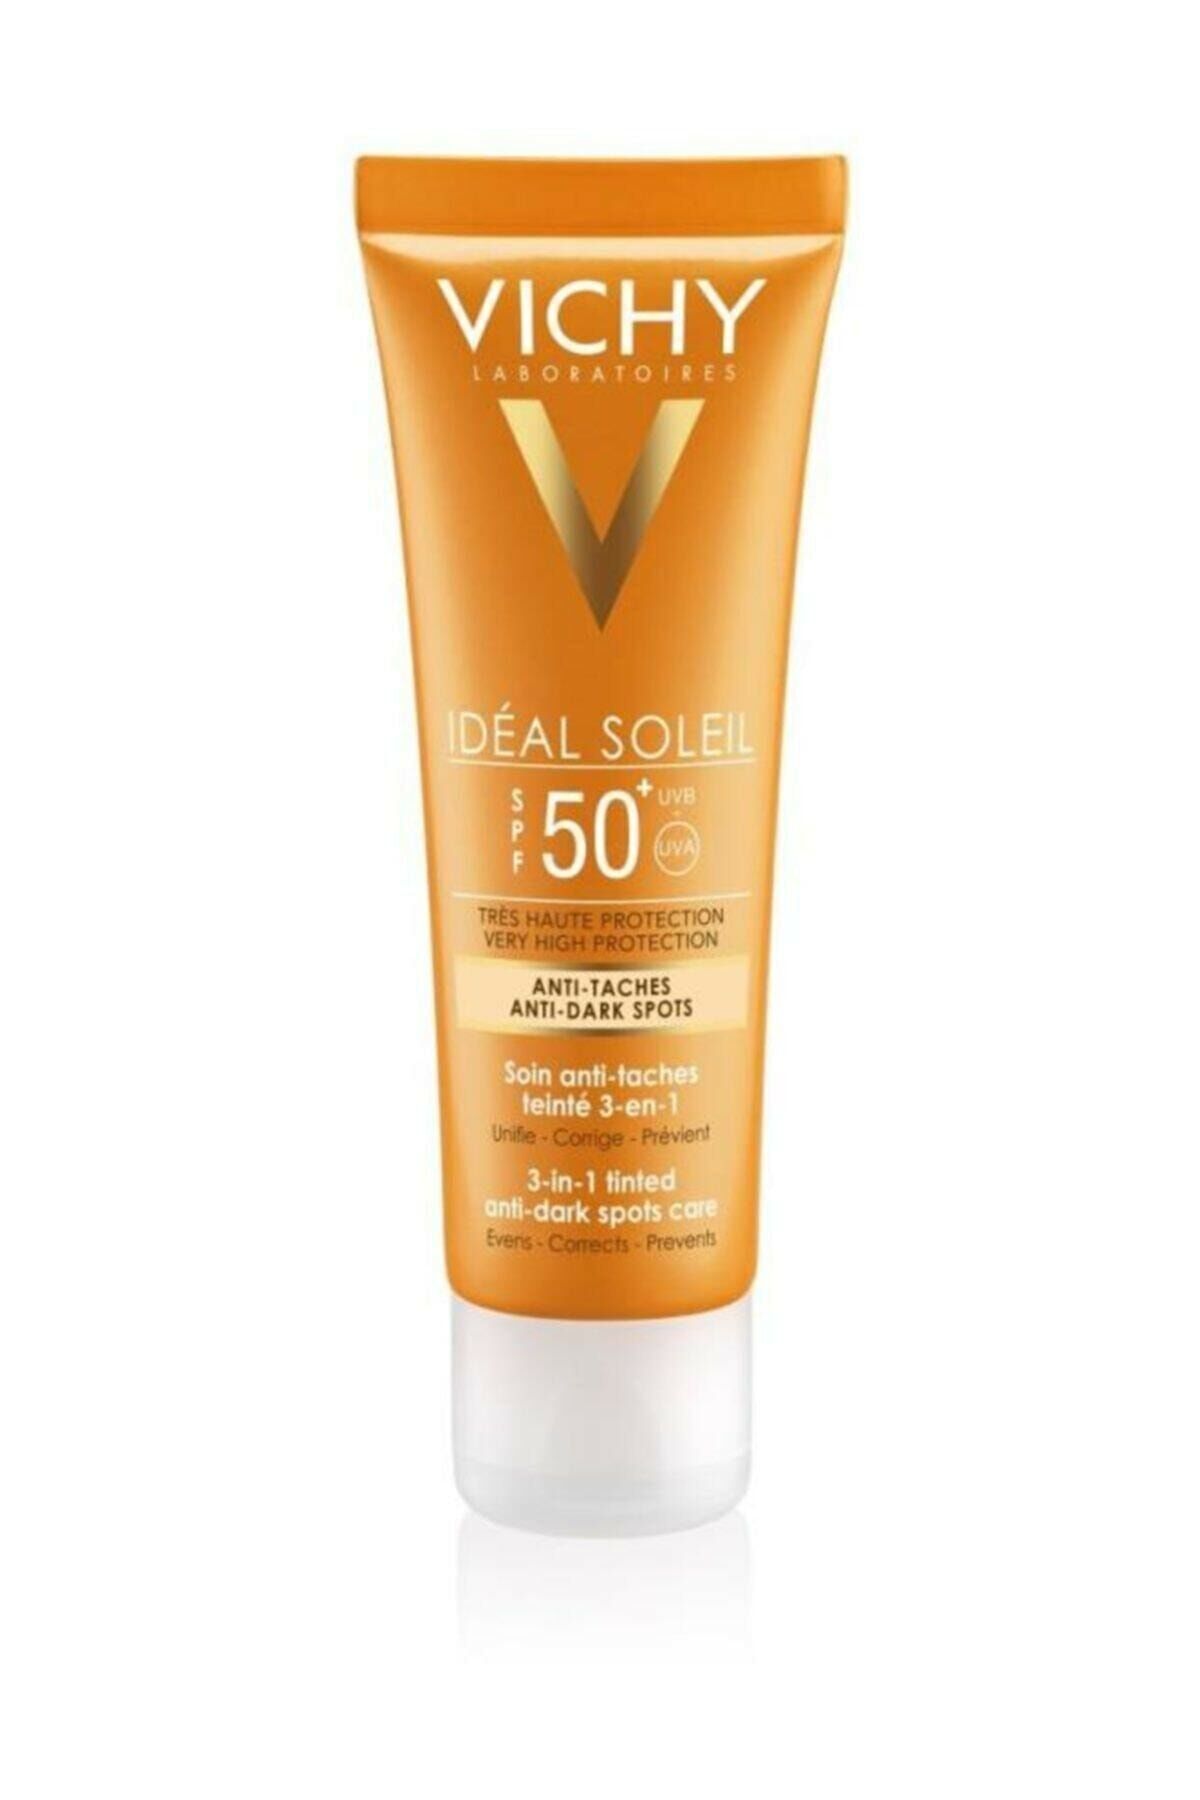 Vichy Ideal Soleil Anti-Dark Spots SPF50+ 50 ml